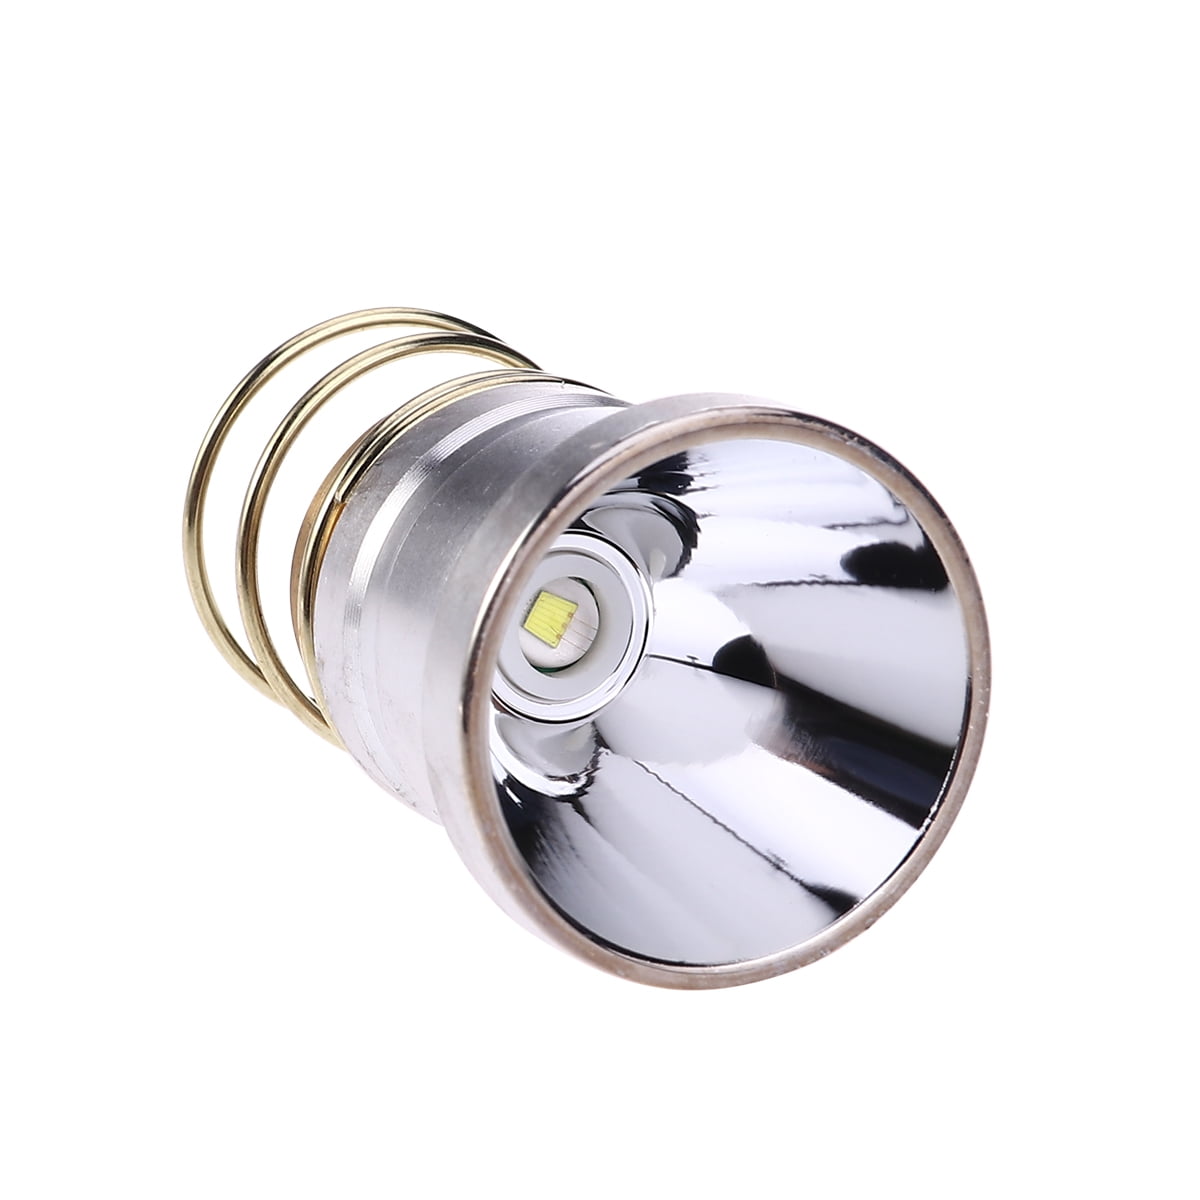 XM-L T6 1000 Lumen Drop-in LED Flashlight Bulb For UltraFire WF-501A WF-501B